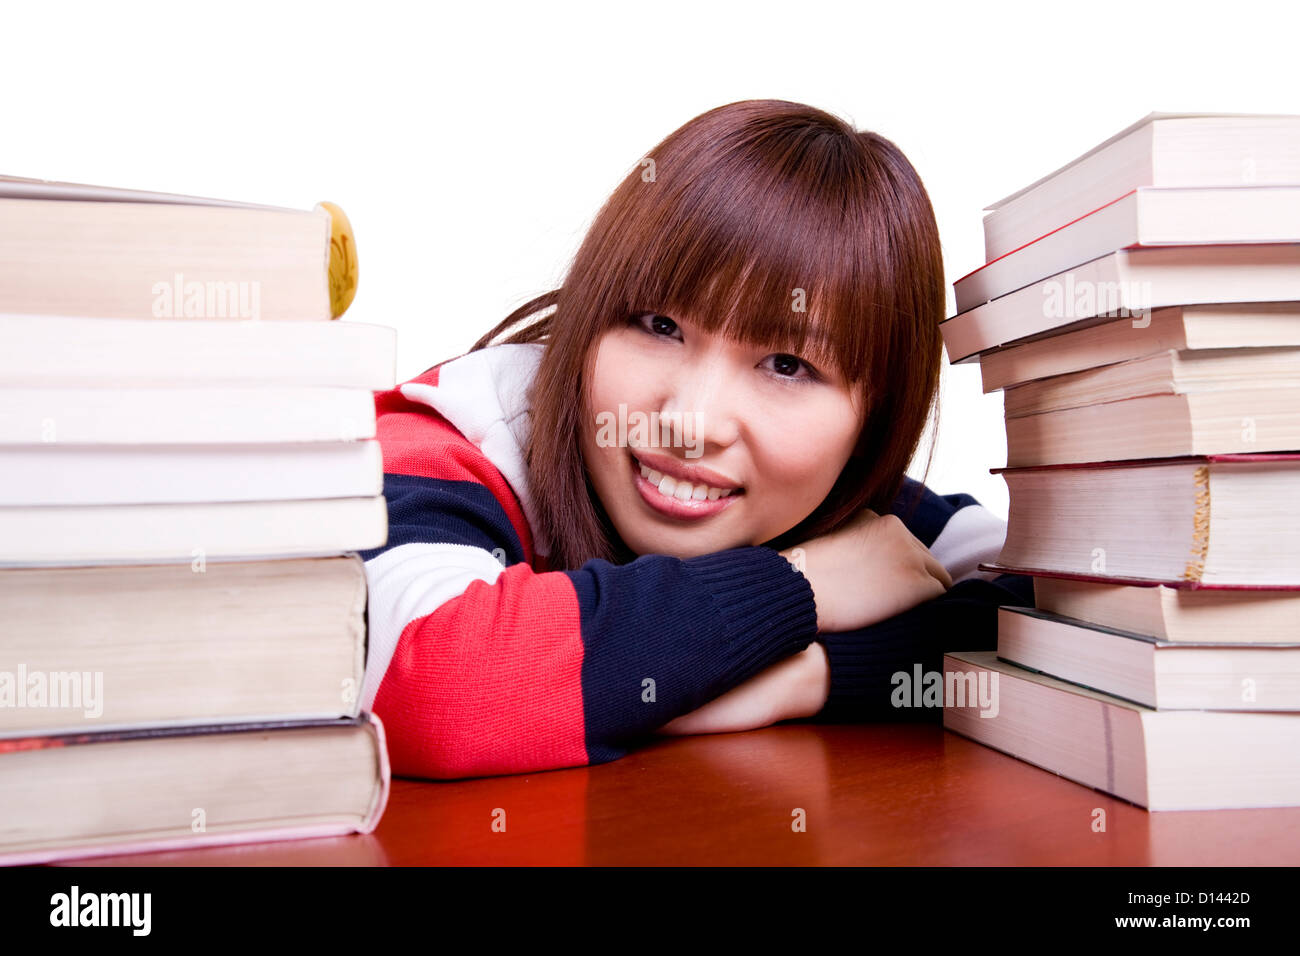 Cheerful Asian female student portrait Stock Photo